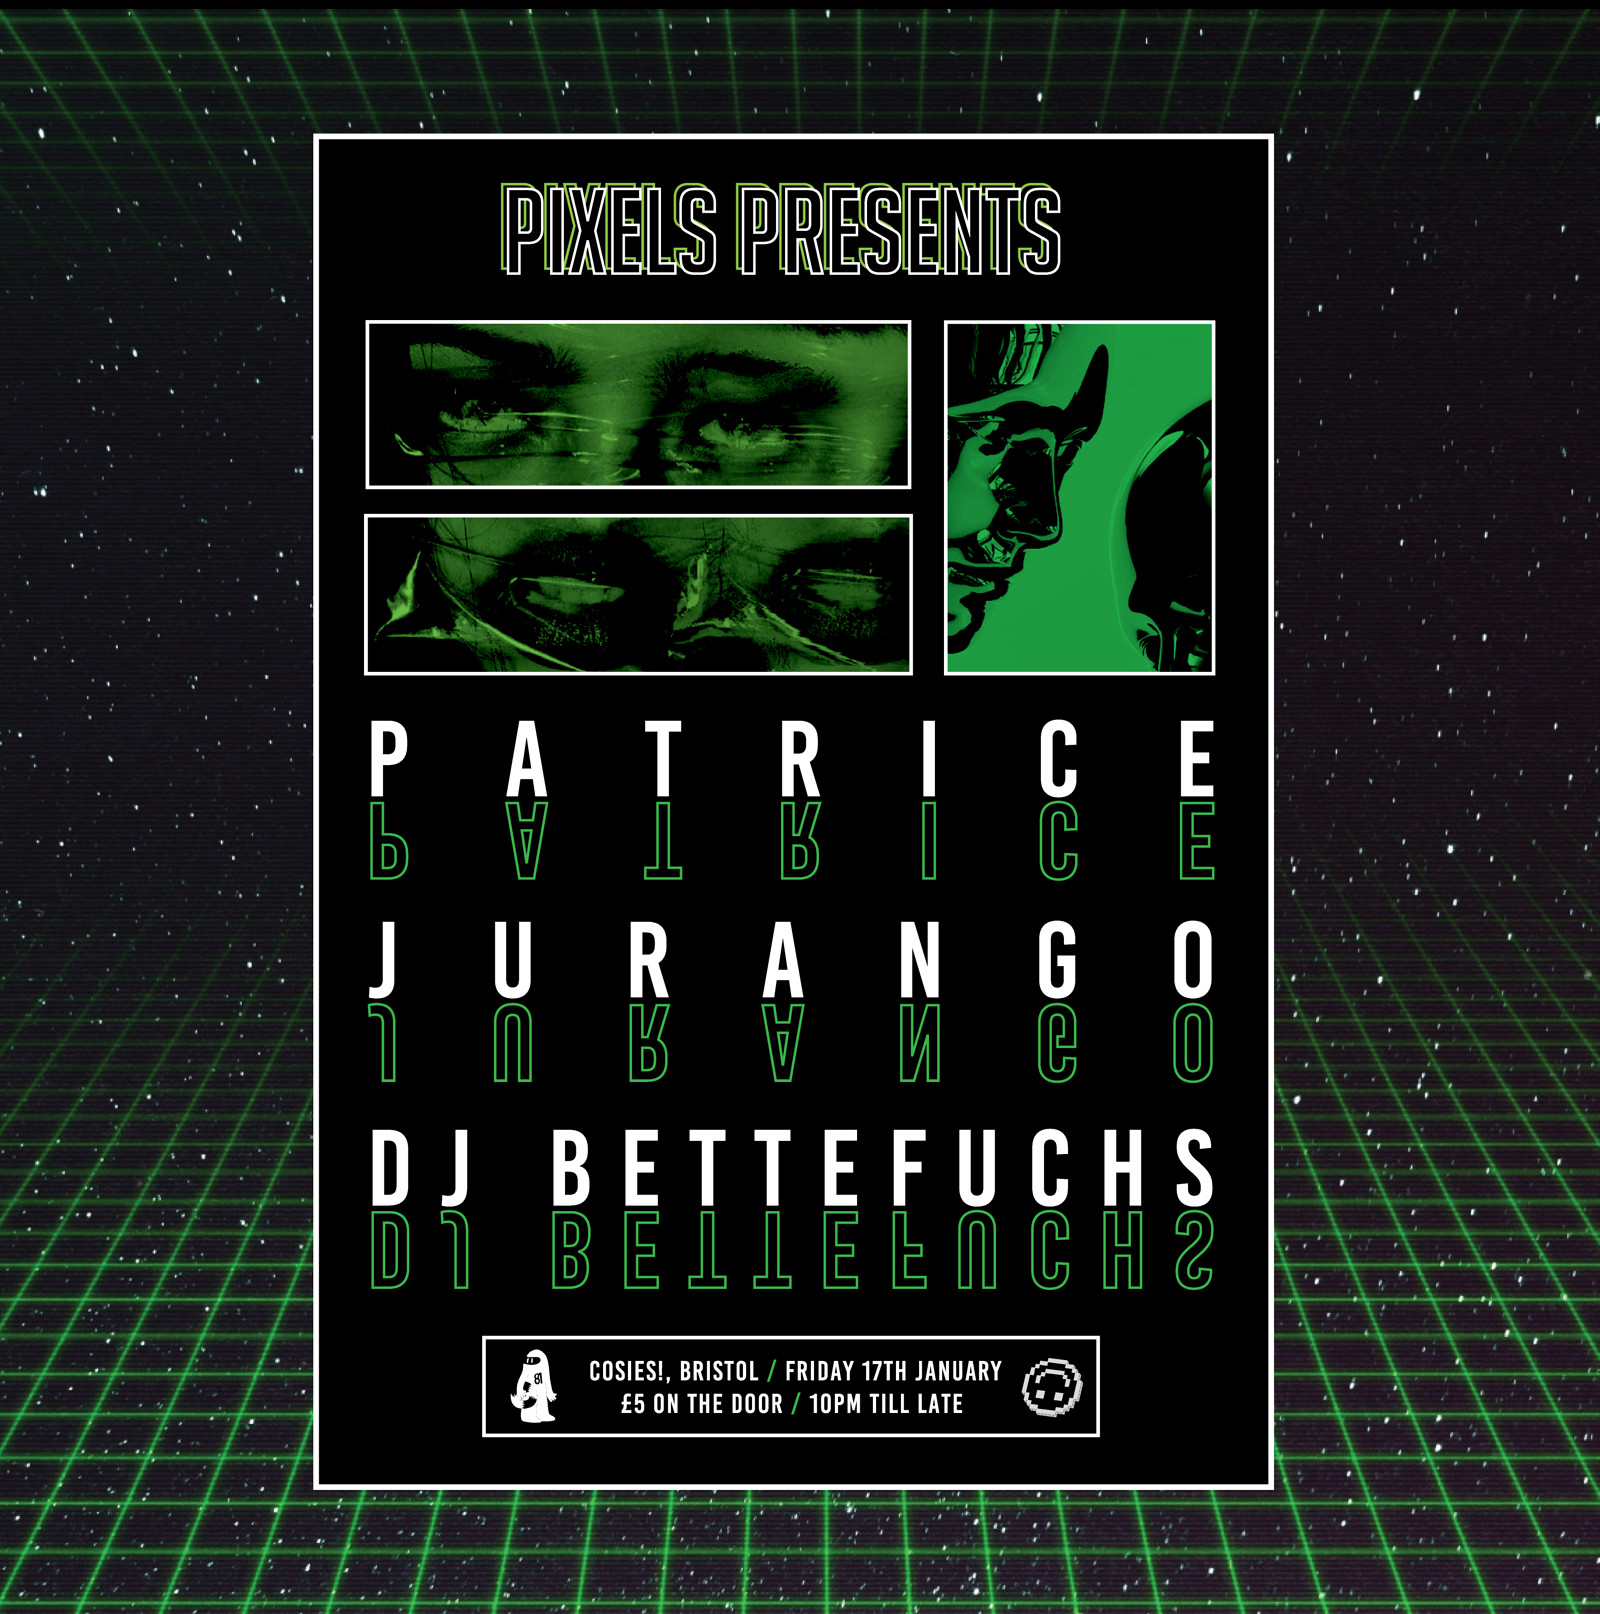 Pixels Presents: Patrice / Jurango / DJ Bettefuchs at Cosies